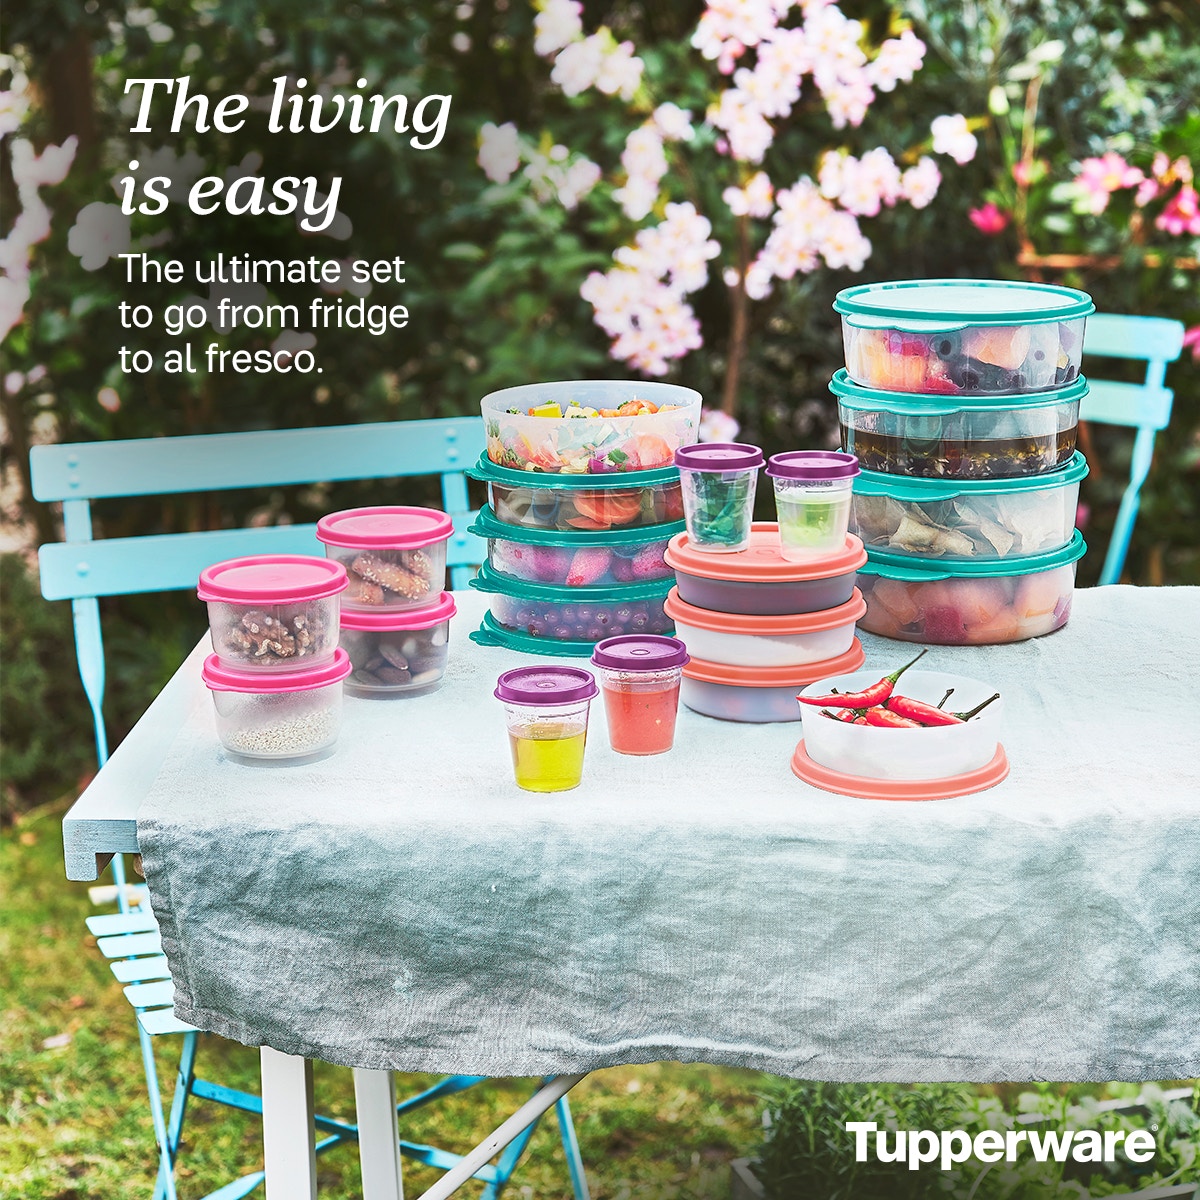 Everything you need for Summer!!
#fridgestorage #prepwithease